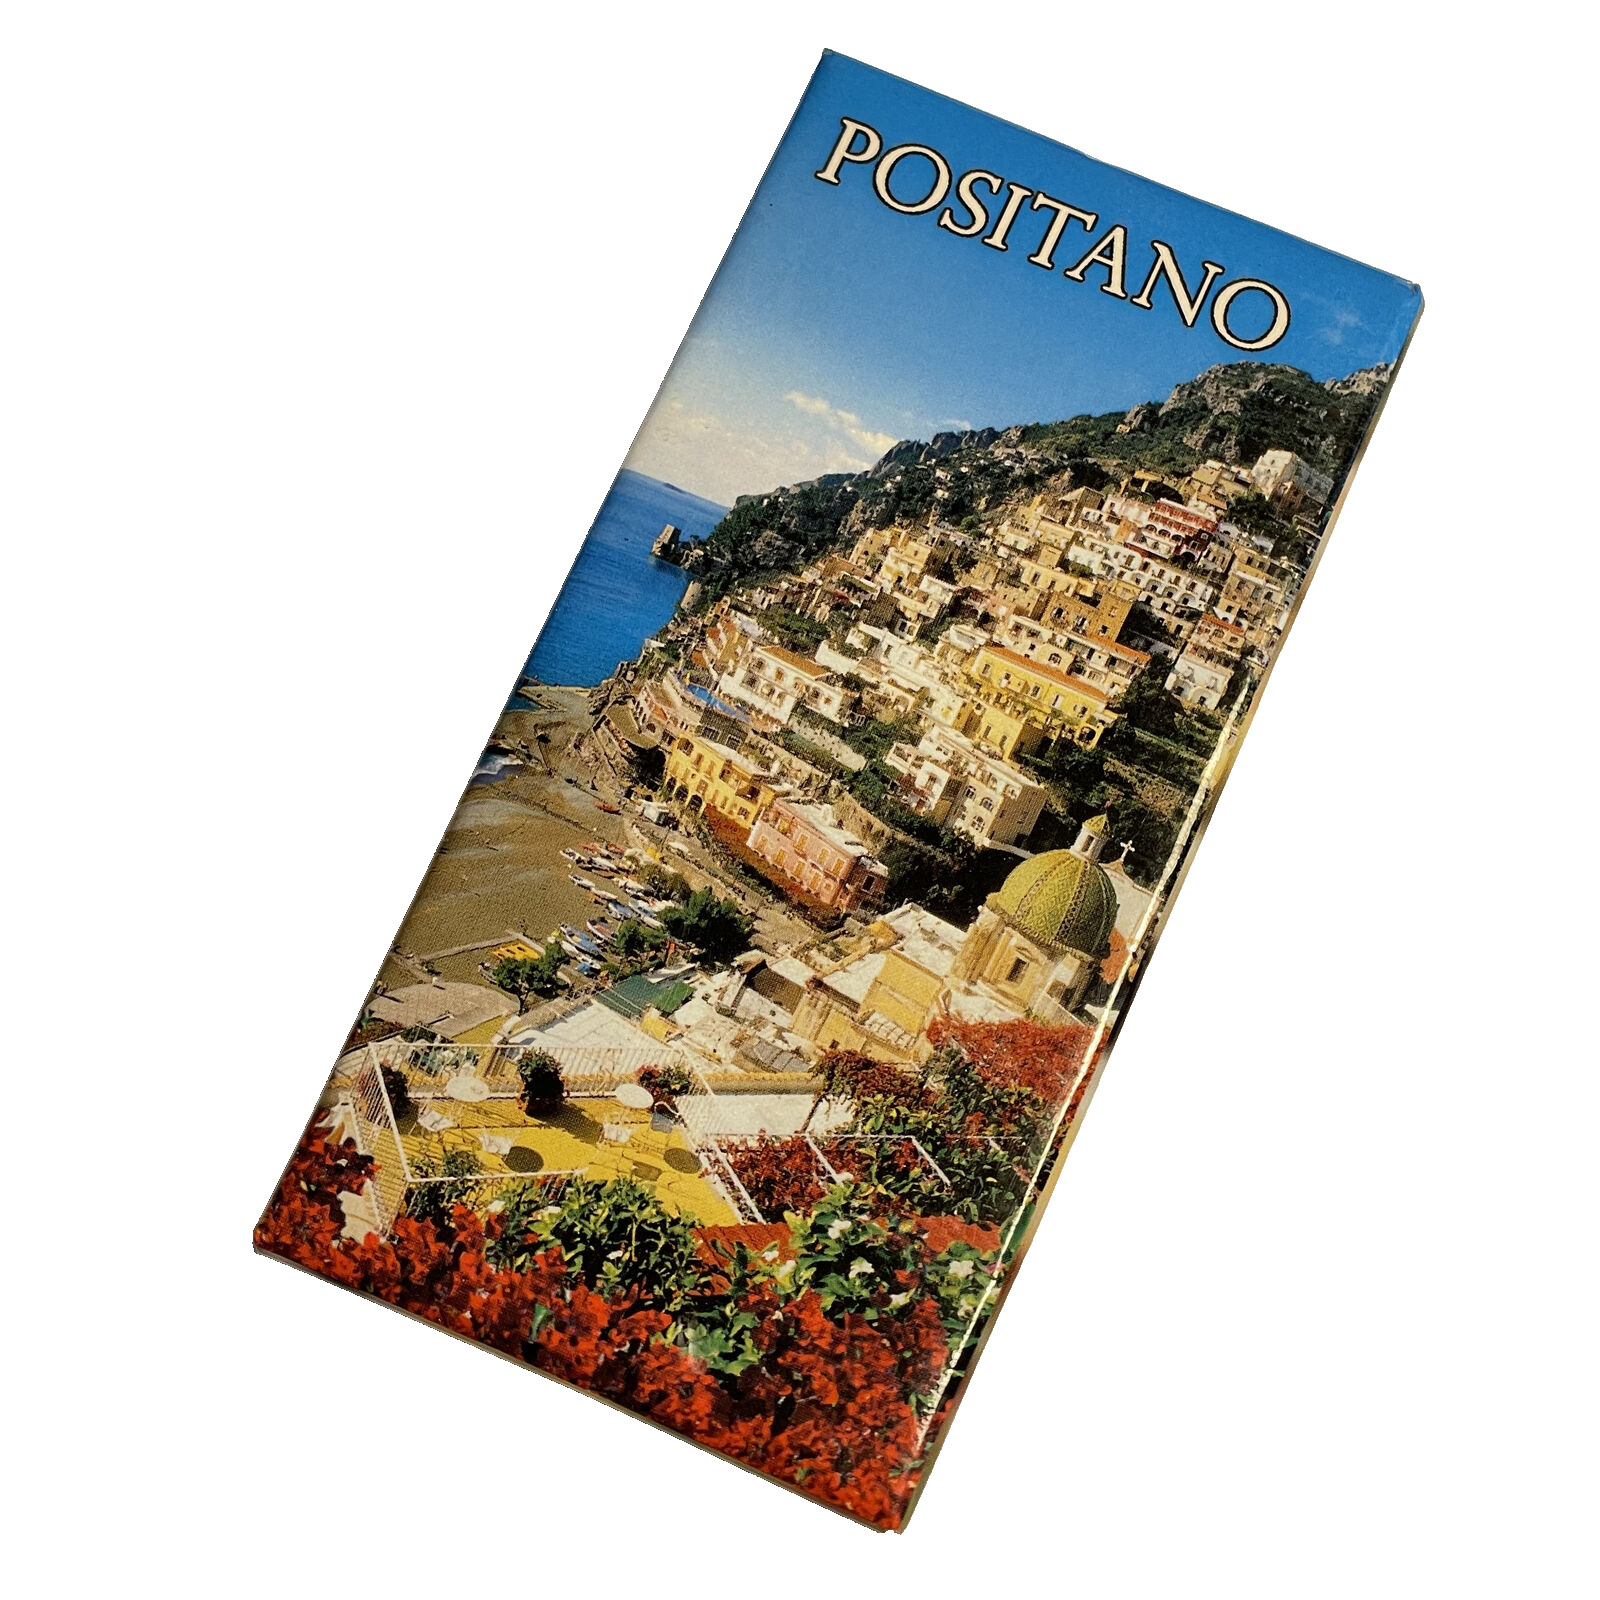 Positano, Italy (Amalfi Coast) - Souvenir Refrigerator Fridge Magnet